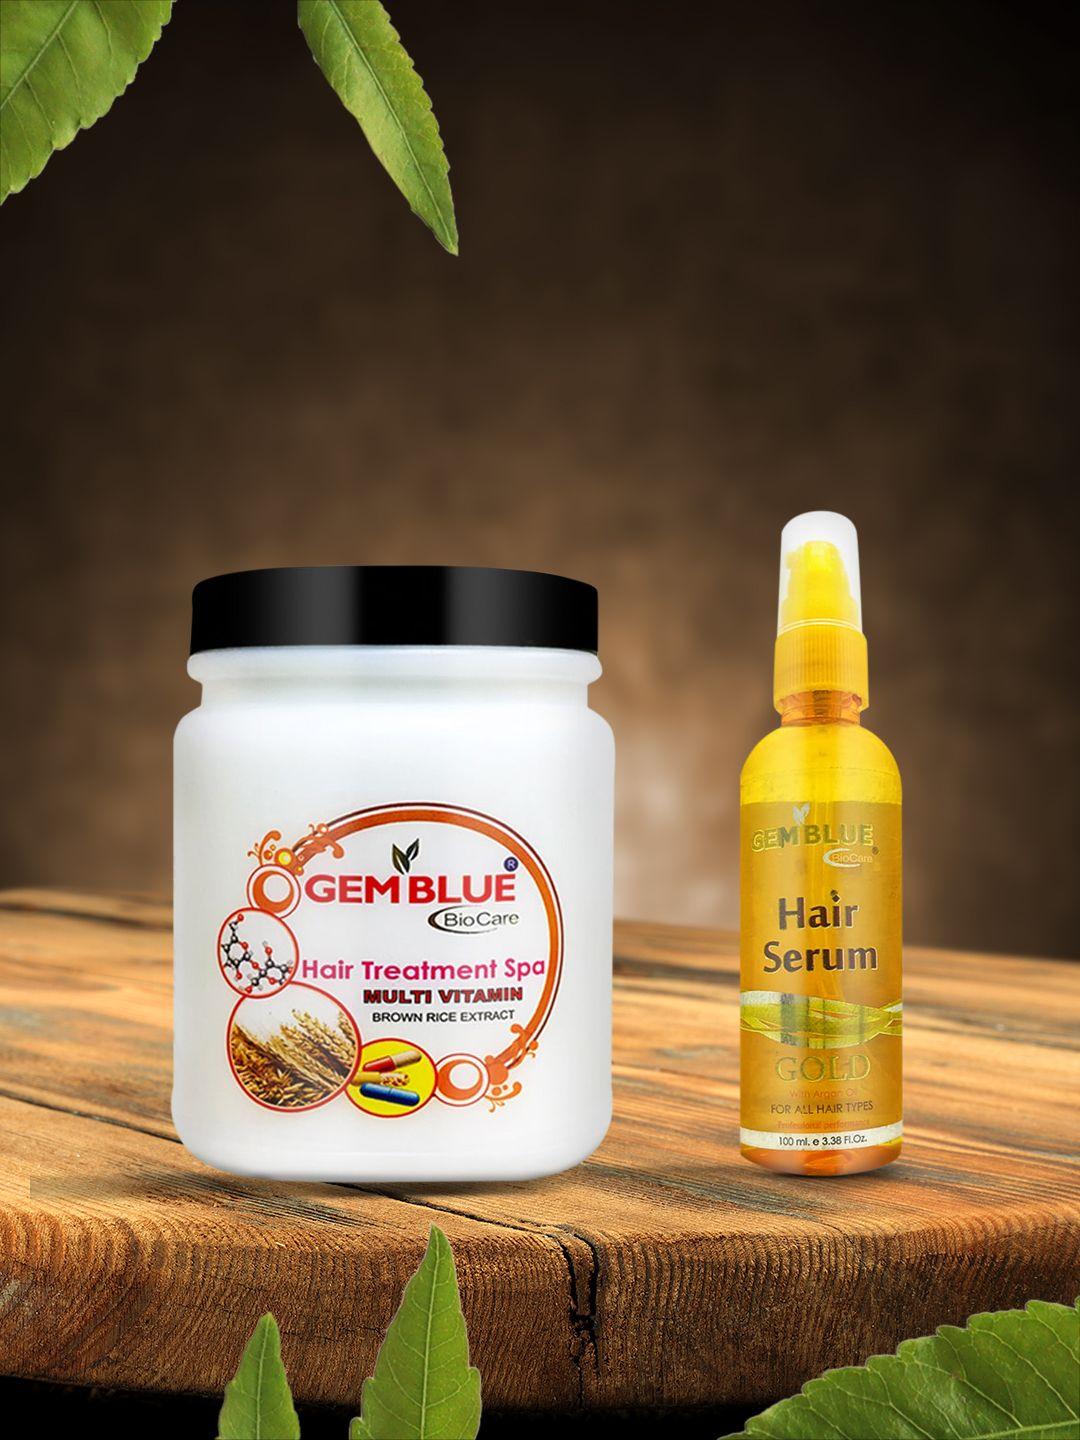 gemblue biocare set of hair spa & serum